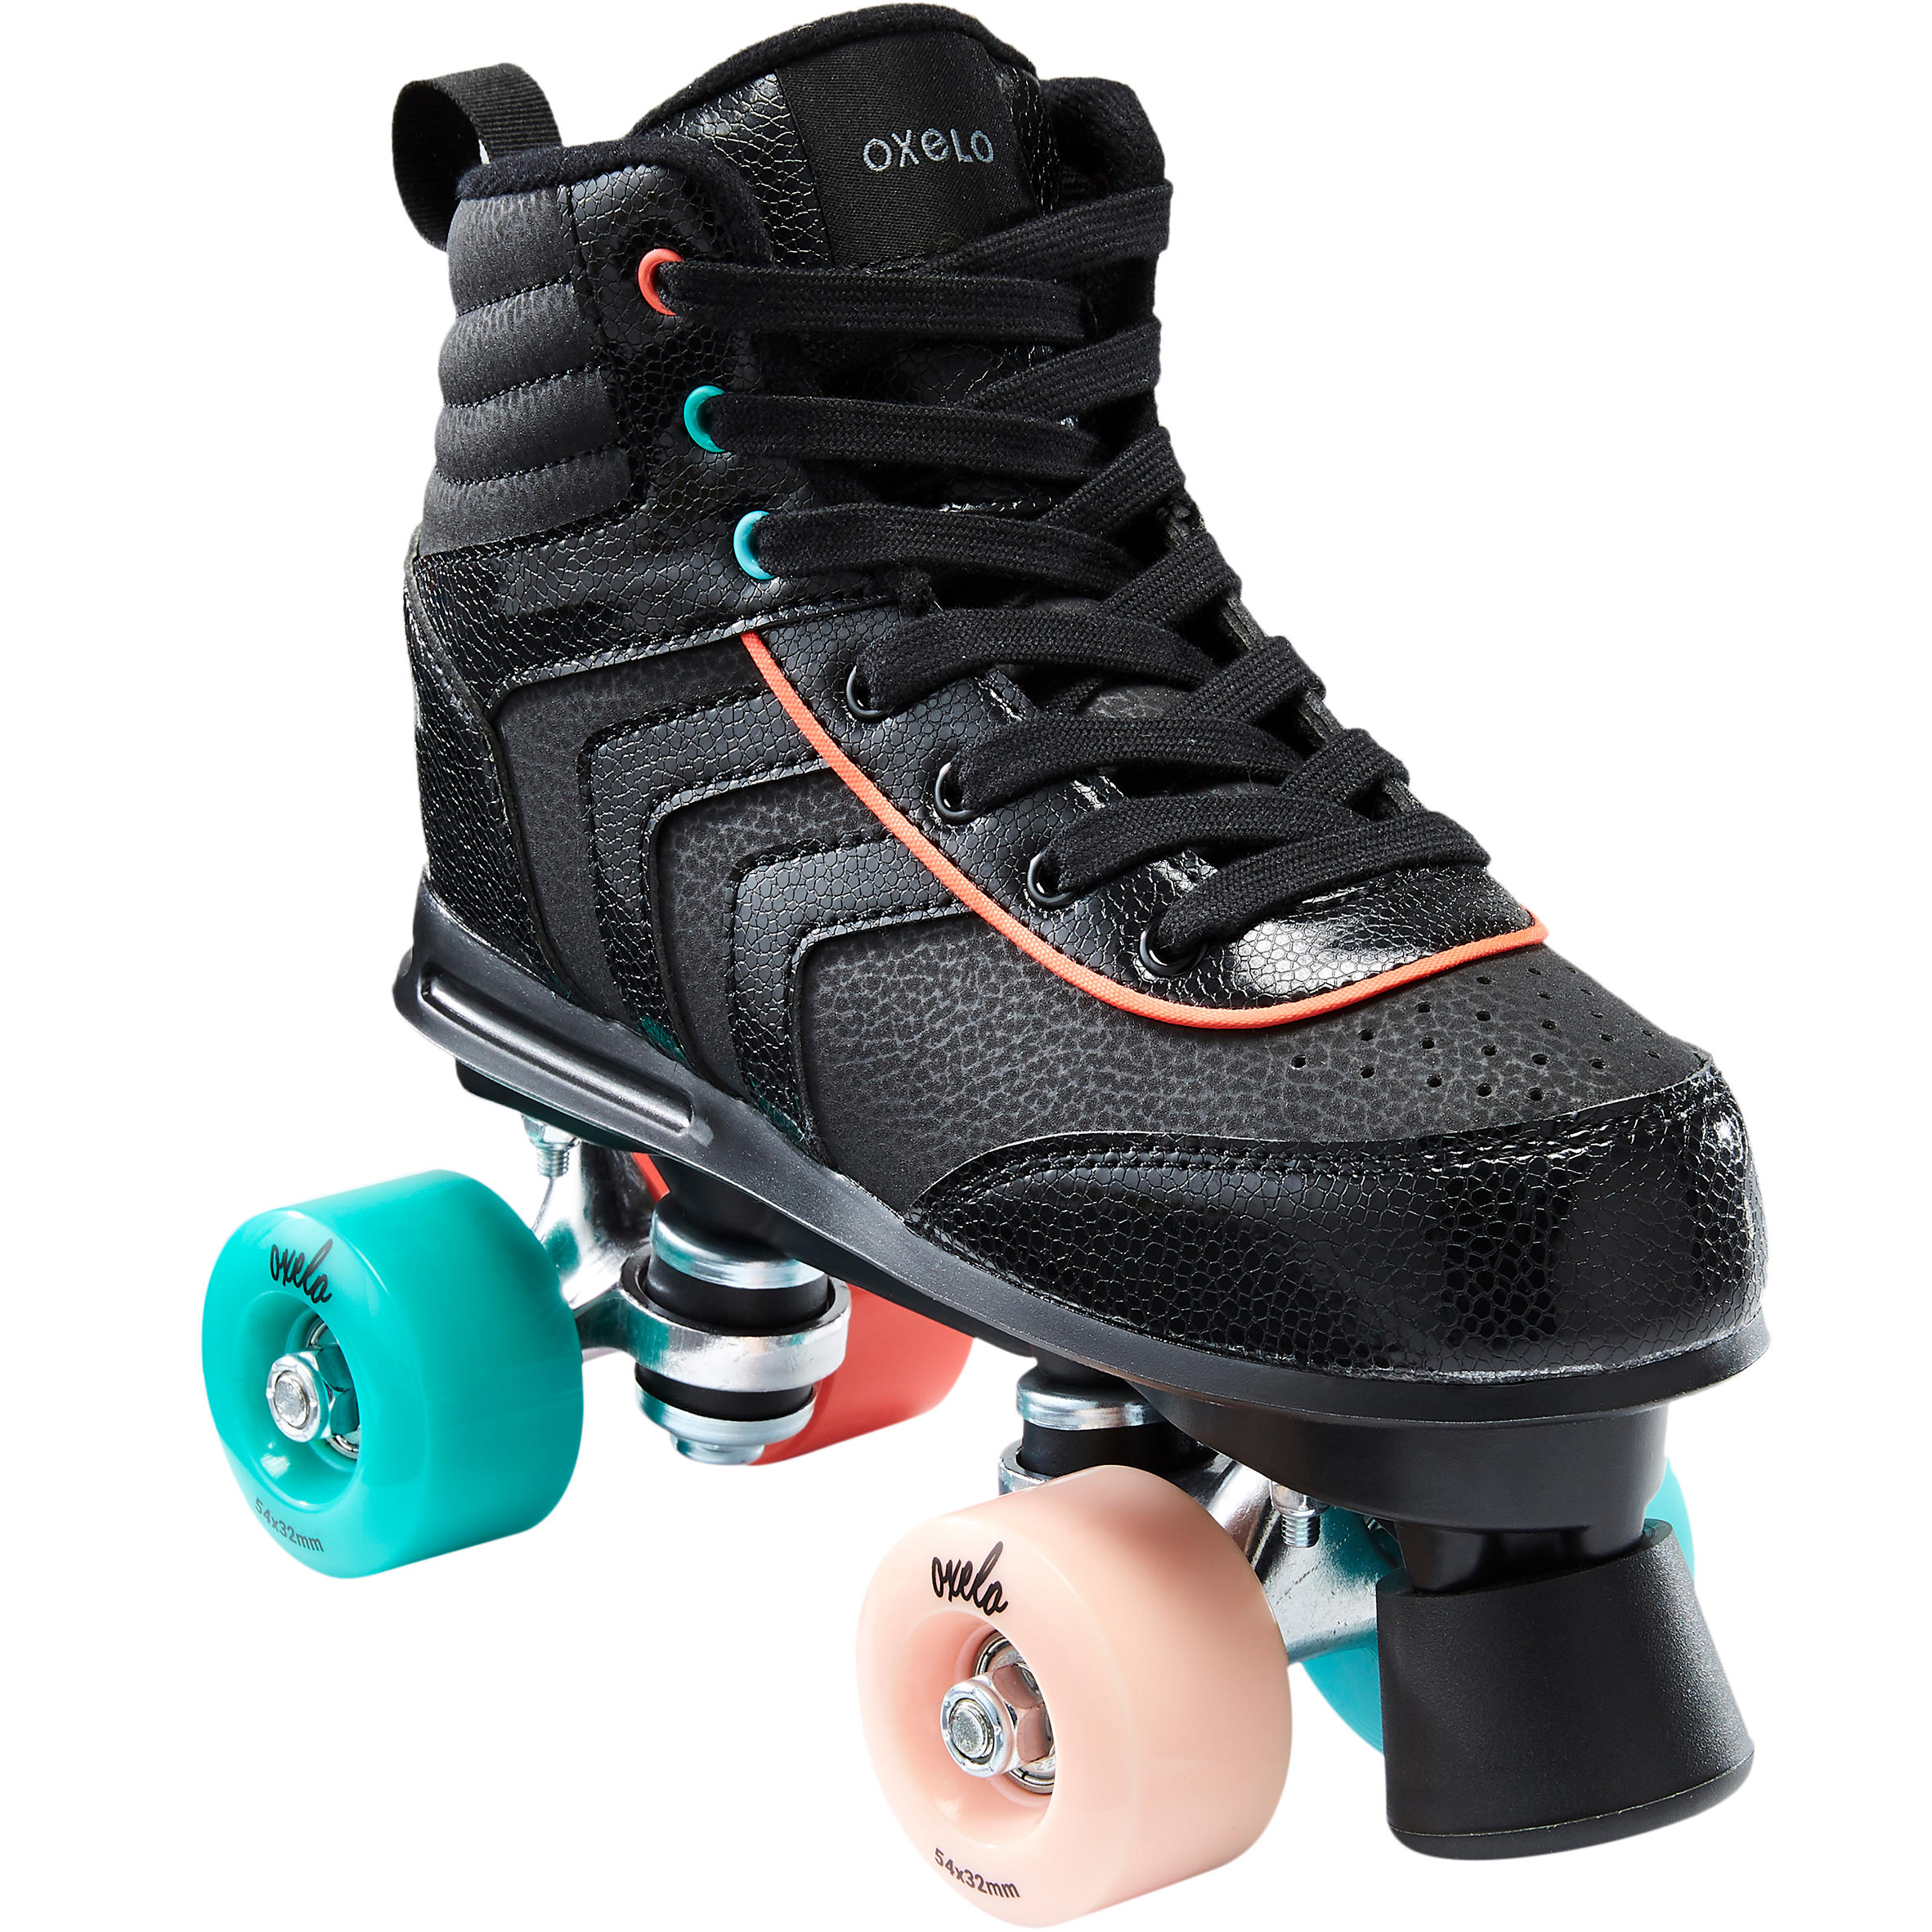 decathlon roller skates price